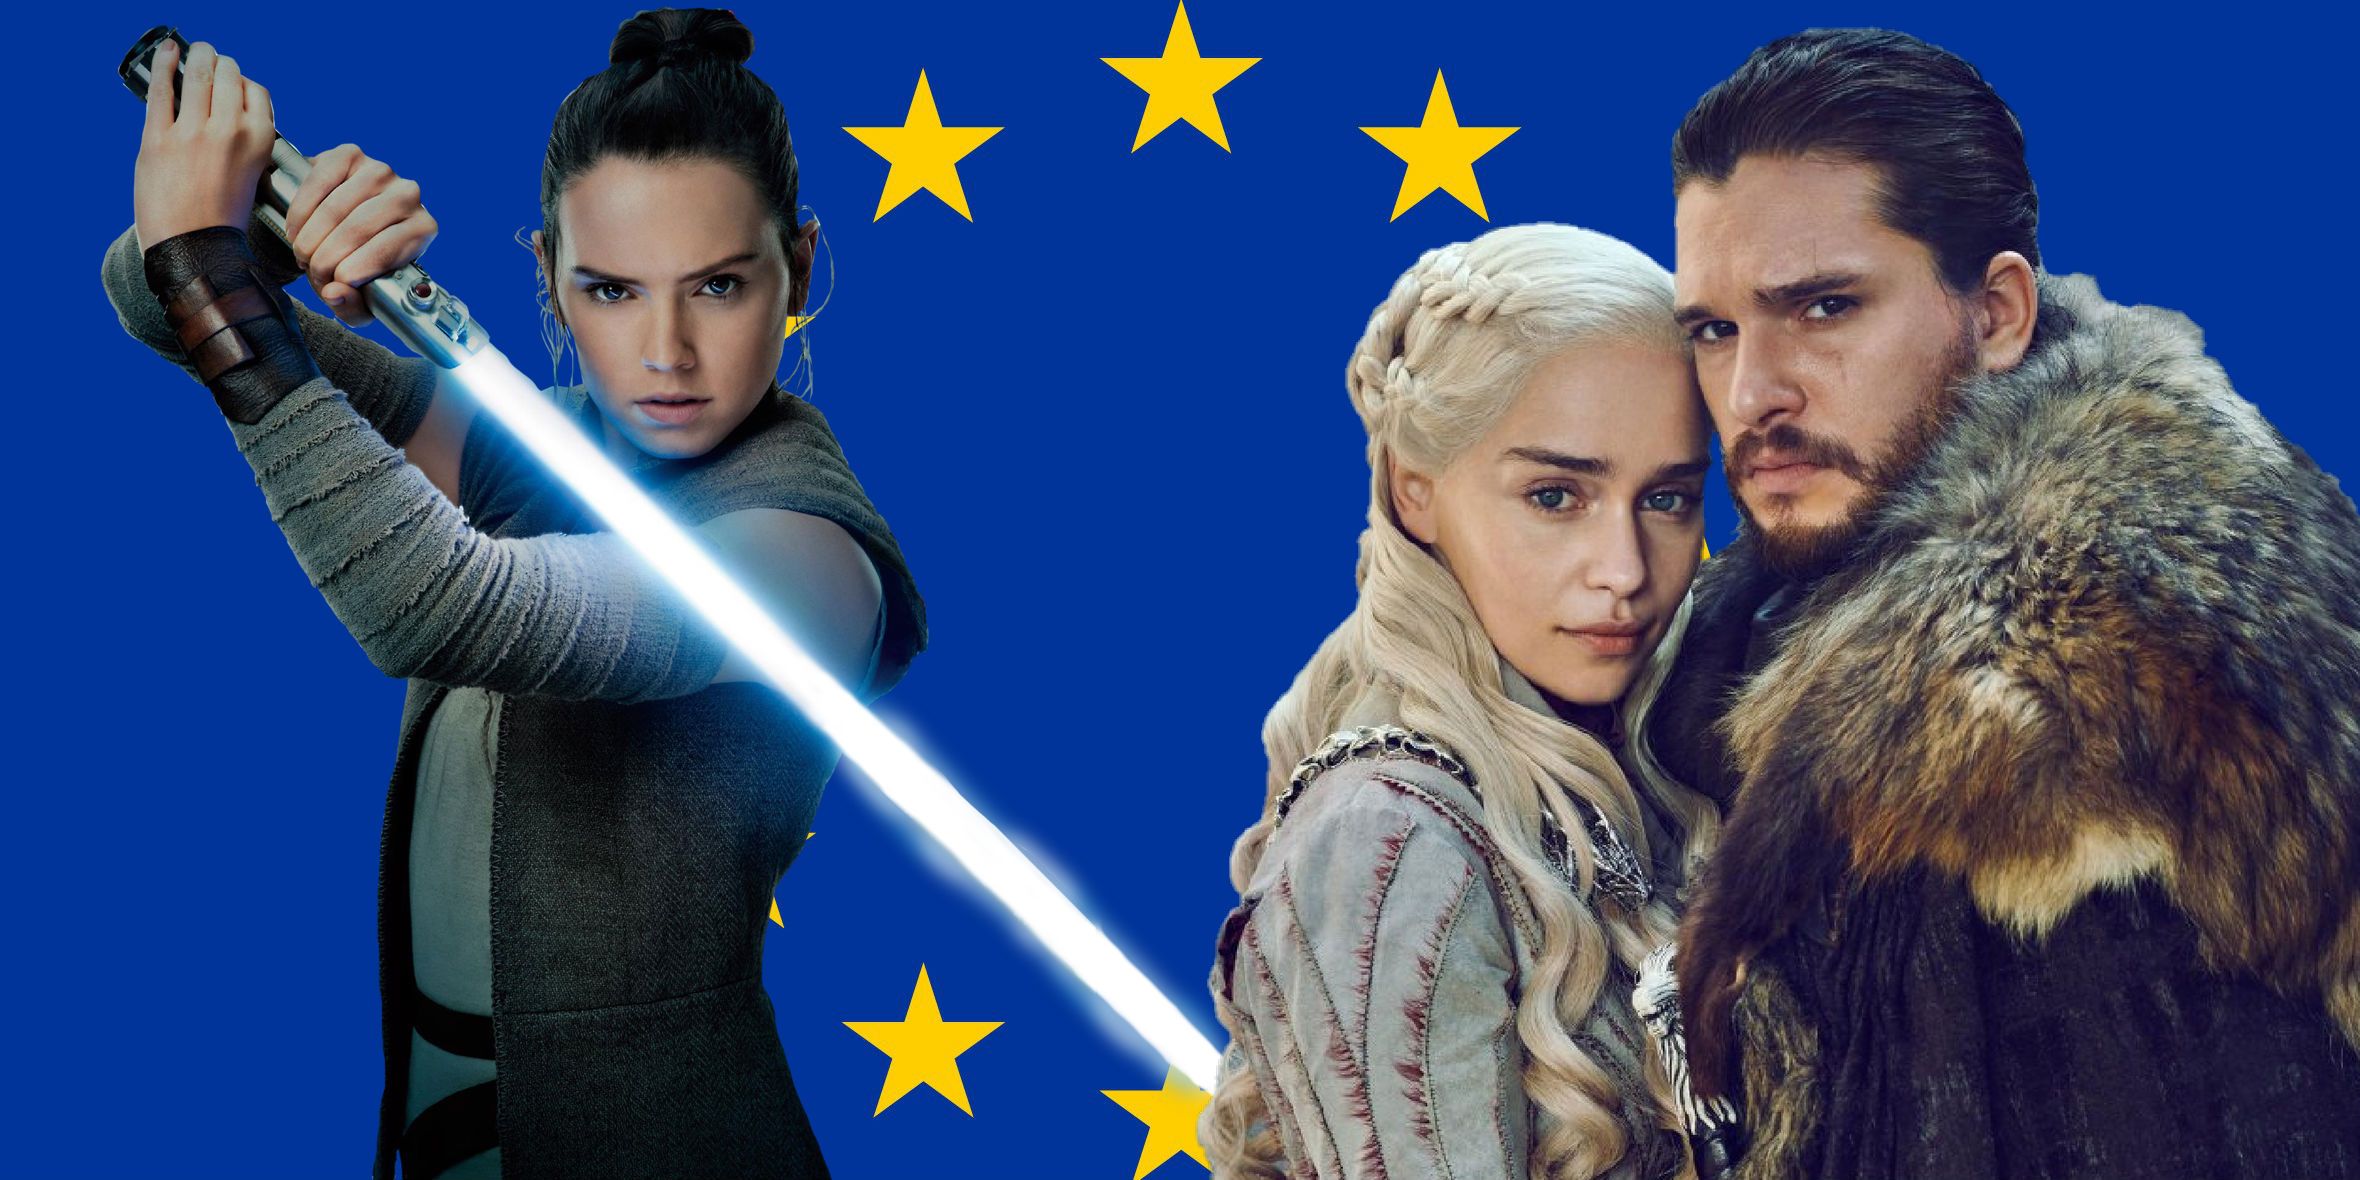 European Flag Daisy Ridley as Rey in Star Wars, Emilia Clarke as Daenerys Targaryen and Kit Harington as Jon Snow in Game of Thrones